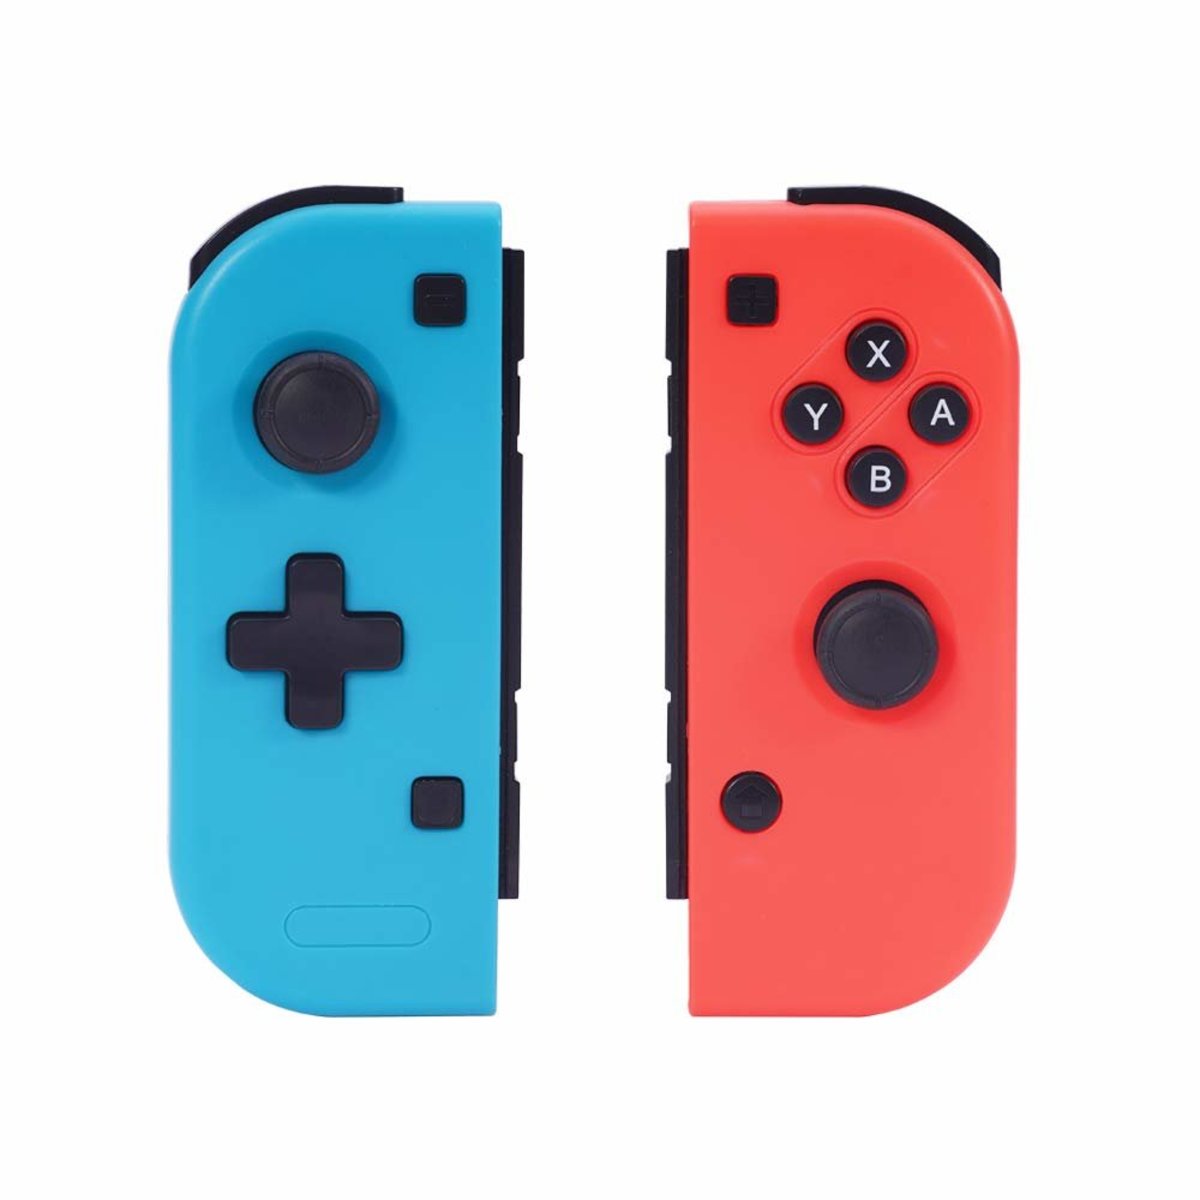 Switch | Joy Con 紅藍(L/R) 手制控制器副廠兼容的任天堂Nintendo Switch / Lite | HKTVmall  香港最大網購平台